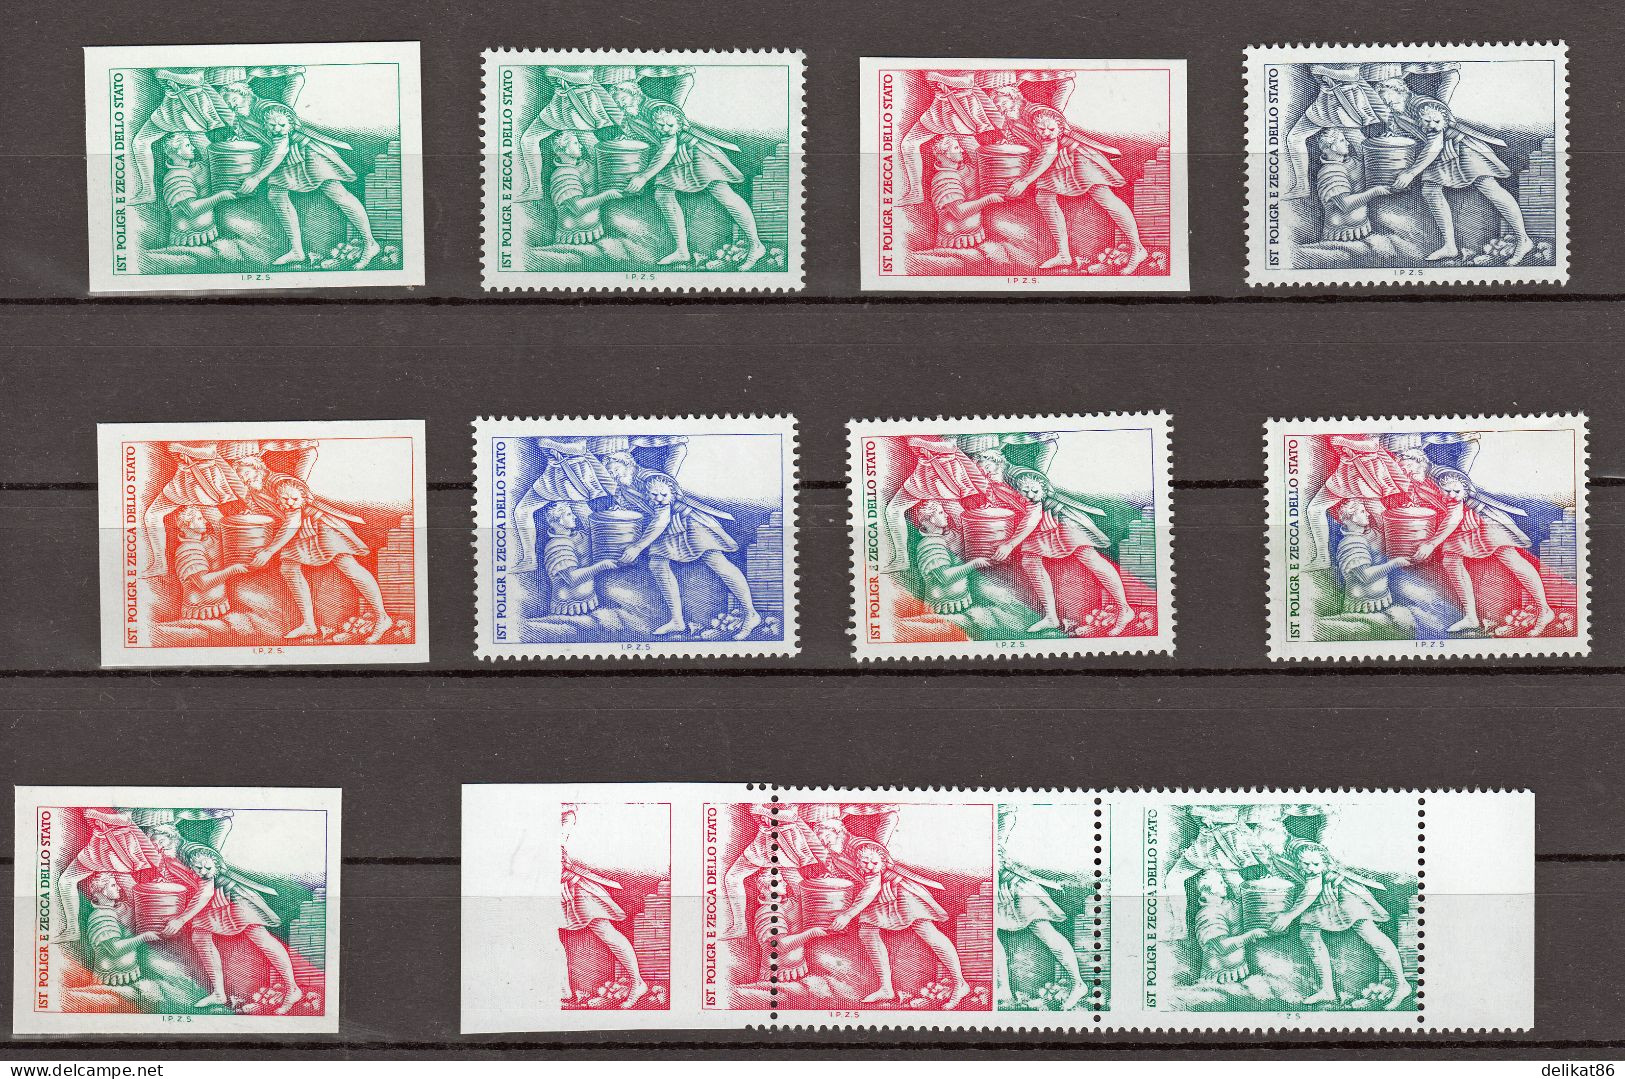 Probedruck Test Stamp Specimen Prove Istituto Poligrafico Dello Stato 2003 - 2001-10: Ungebraucht